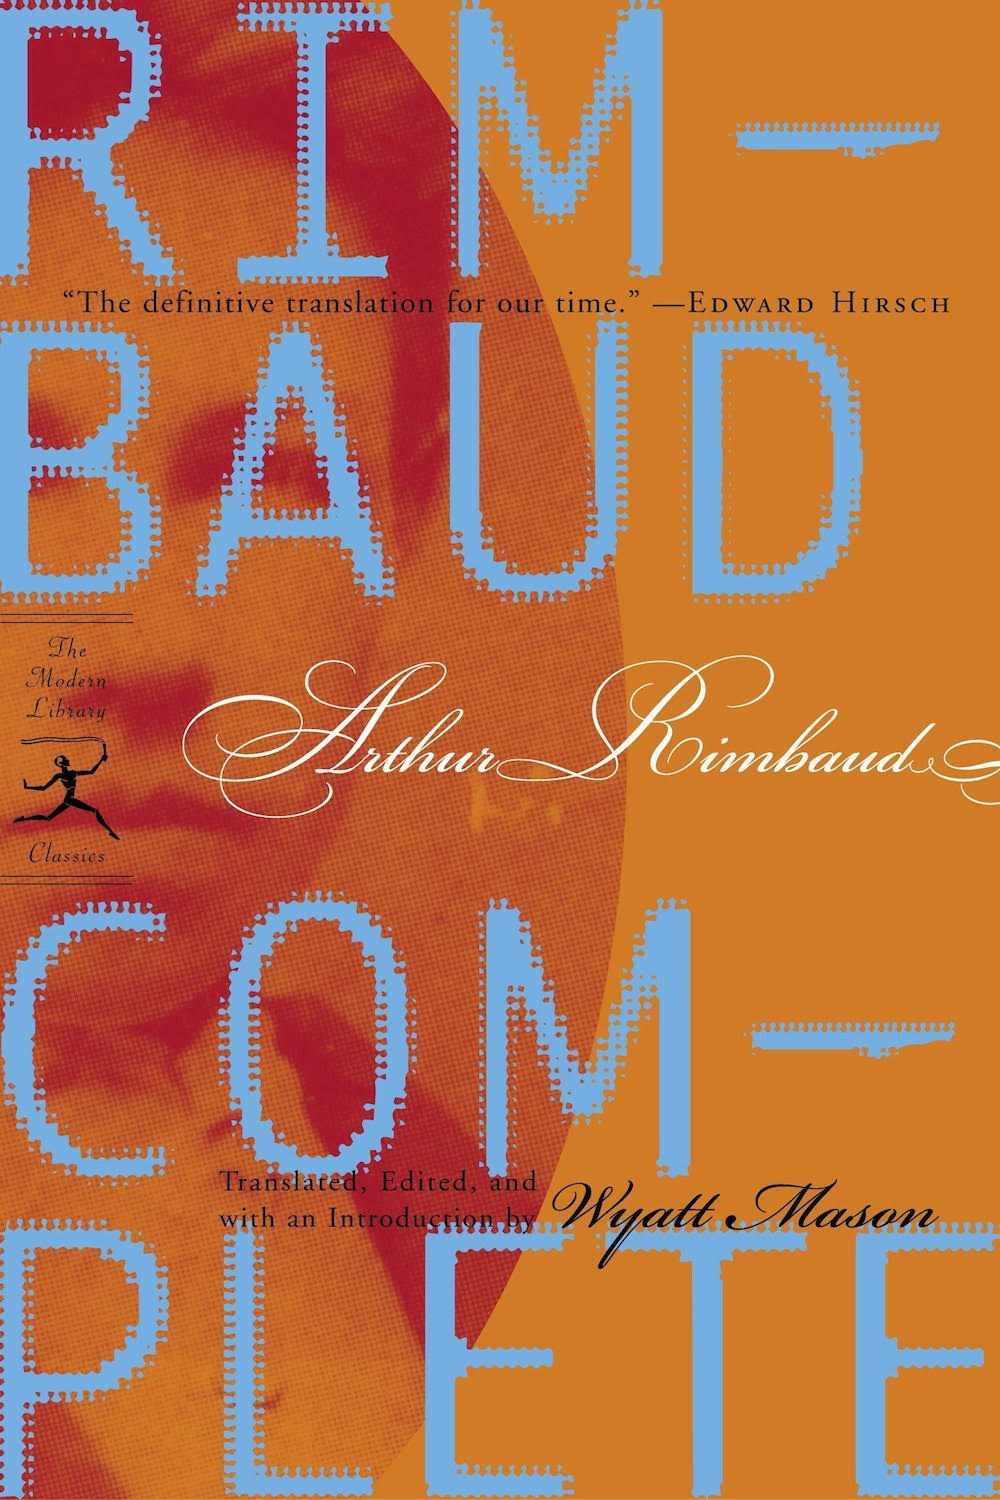 Rimbaud Complete, translation by Wyatt Mason